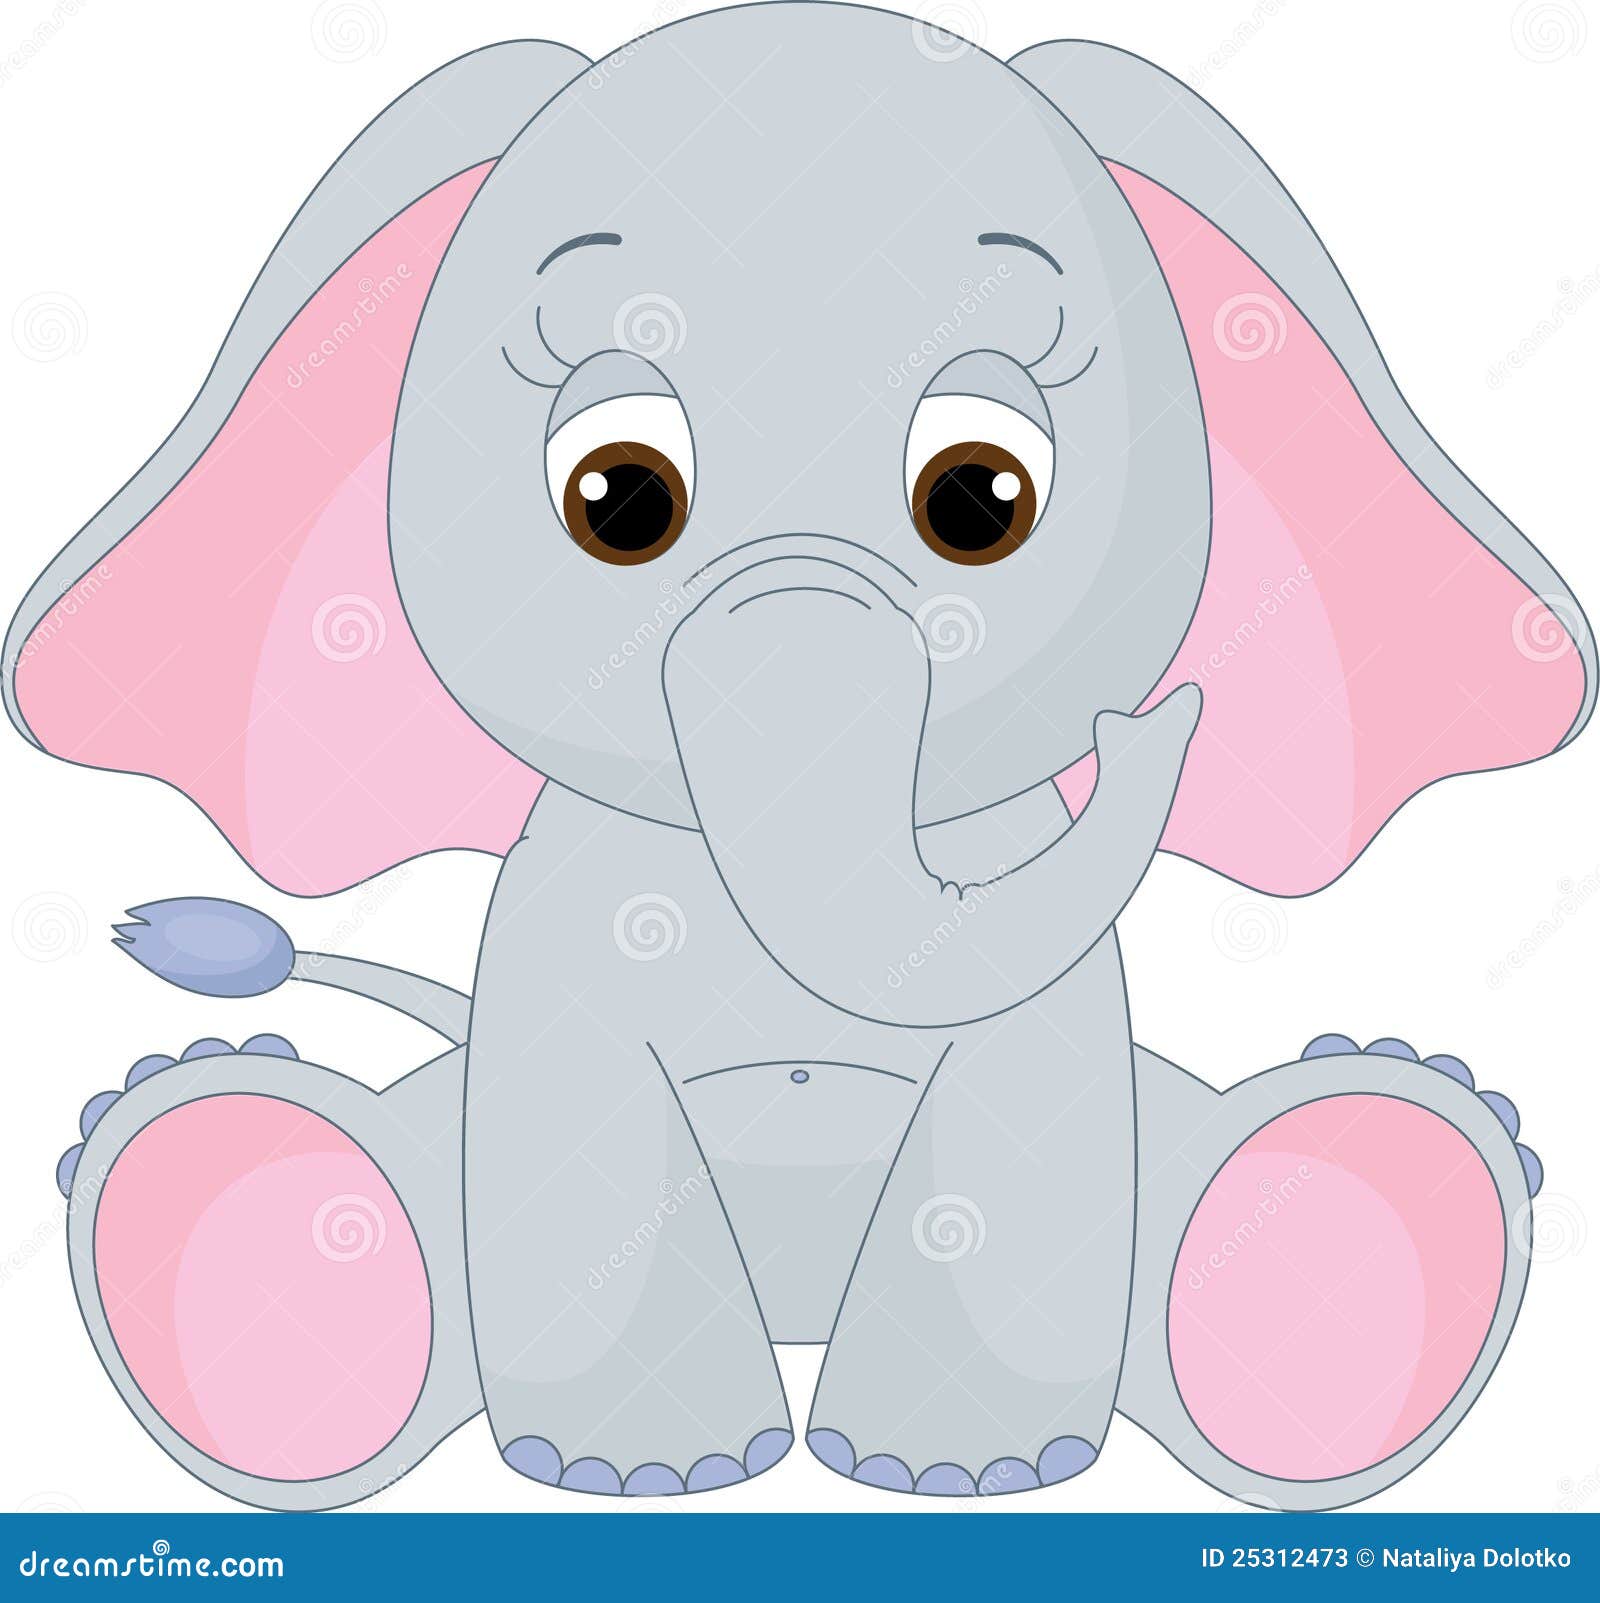 baby elephant clip art images - photo #34